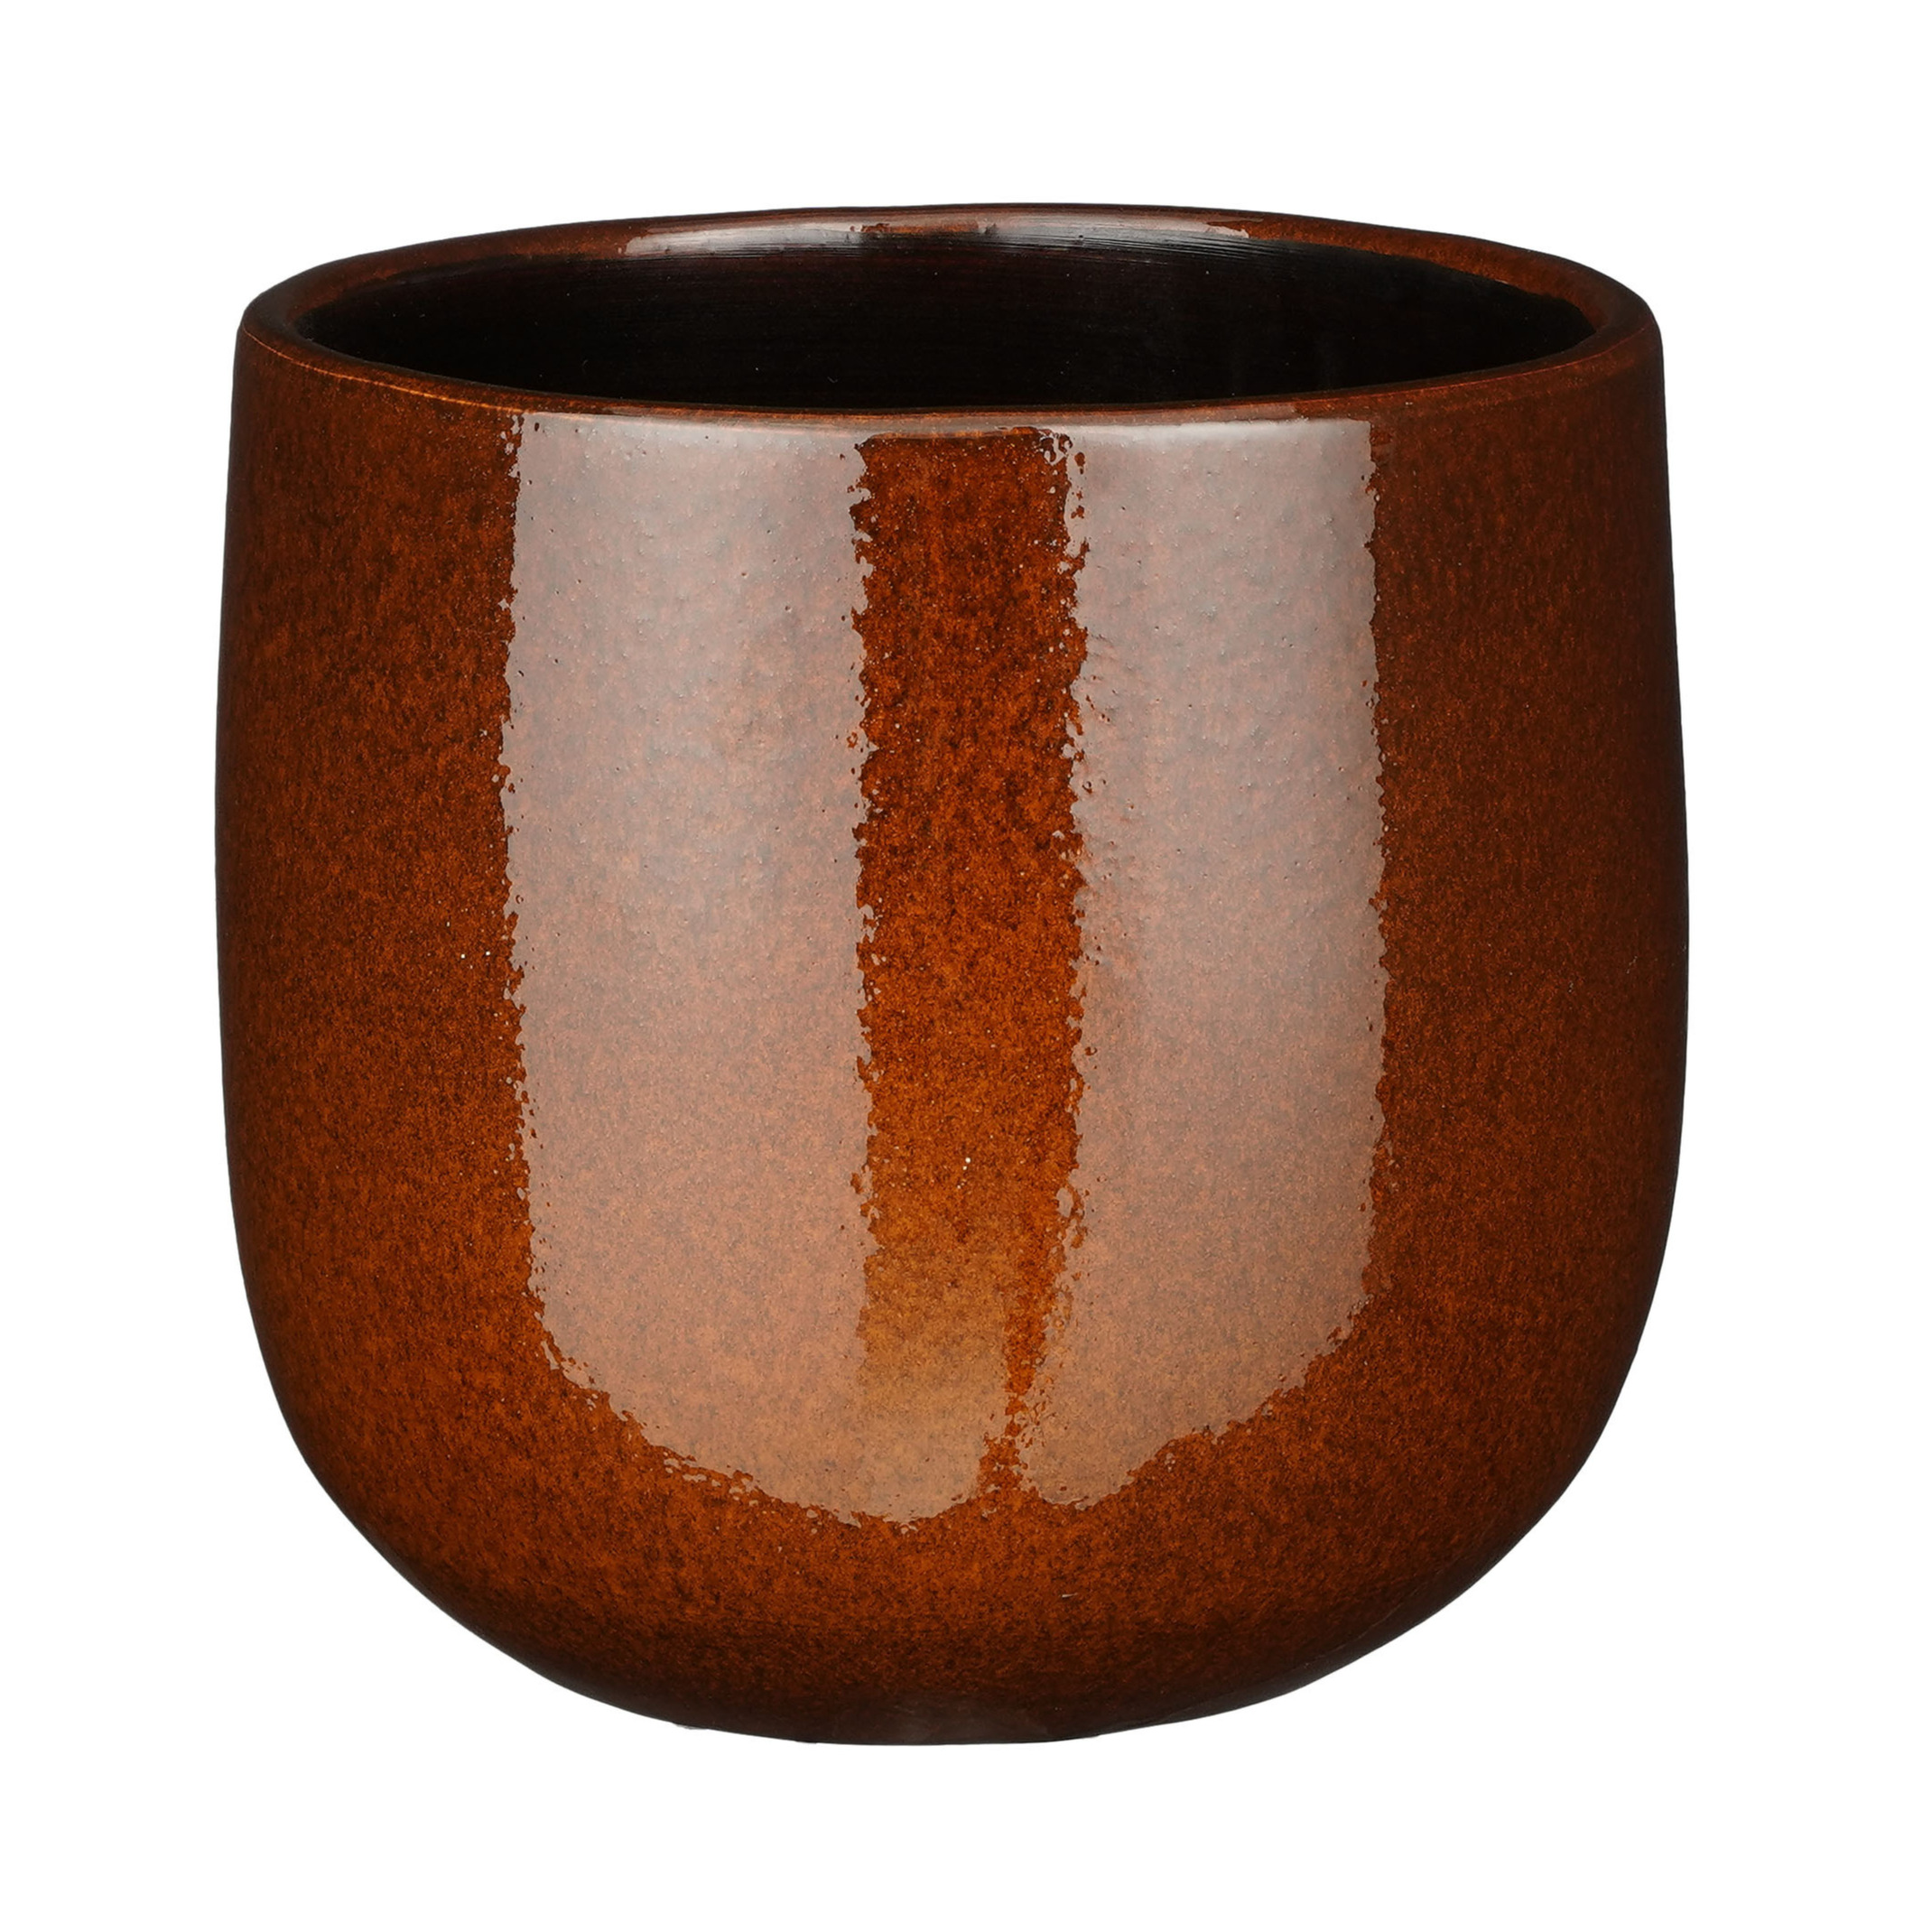 Plantenpot-bloempot keramiek terra bruin speels licht gevlekt patroon D21-H19 cm